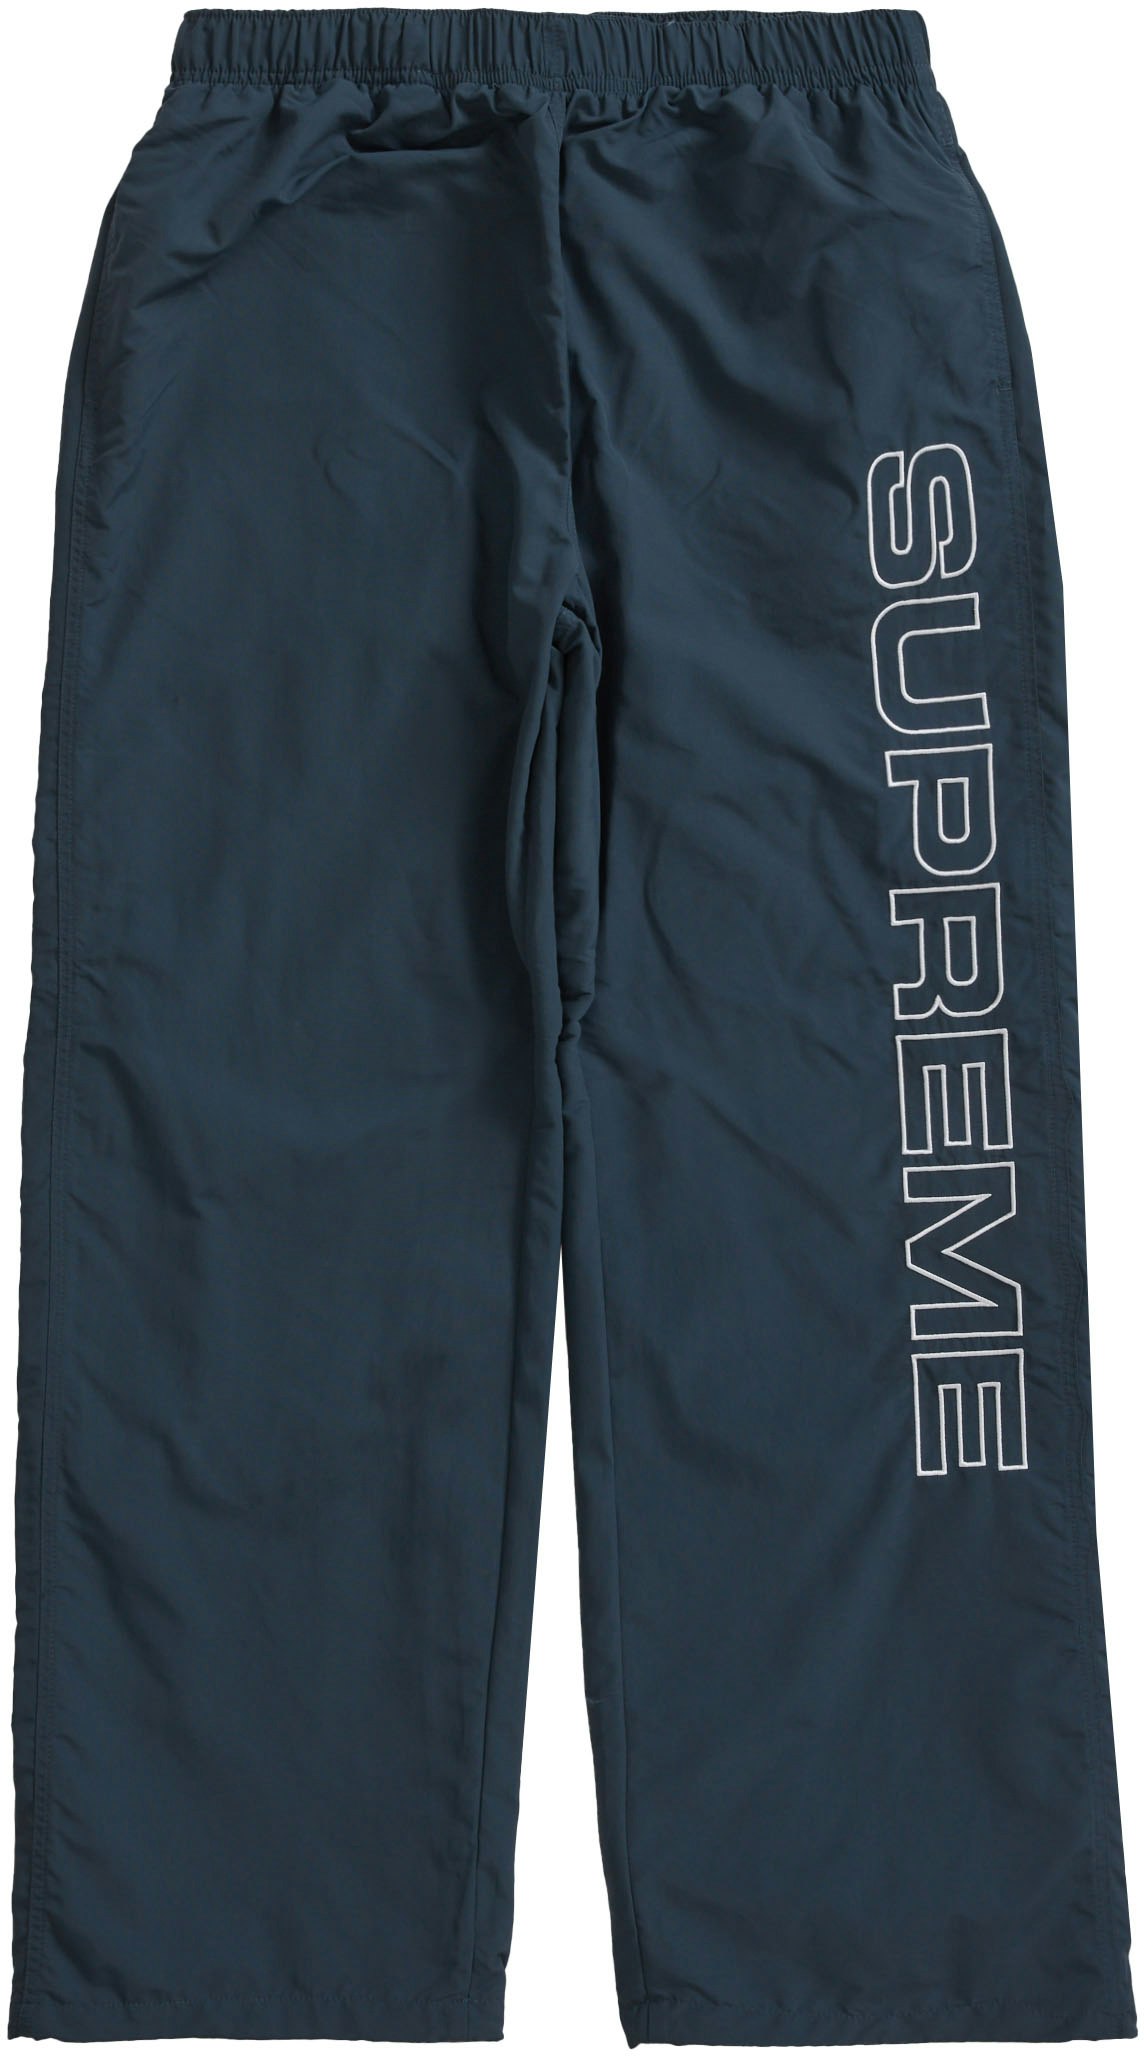 supreme spellout track pants size xl